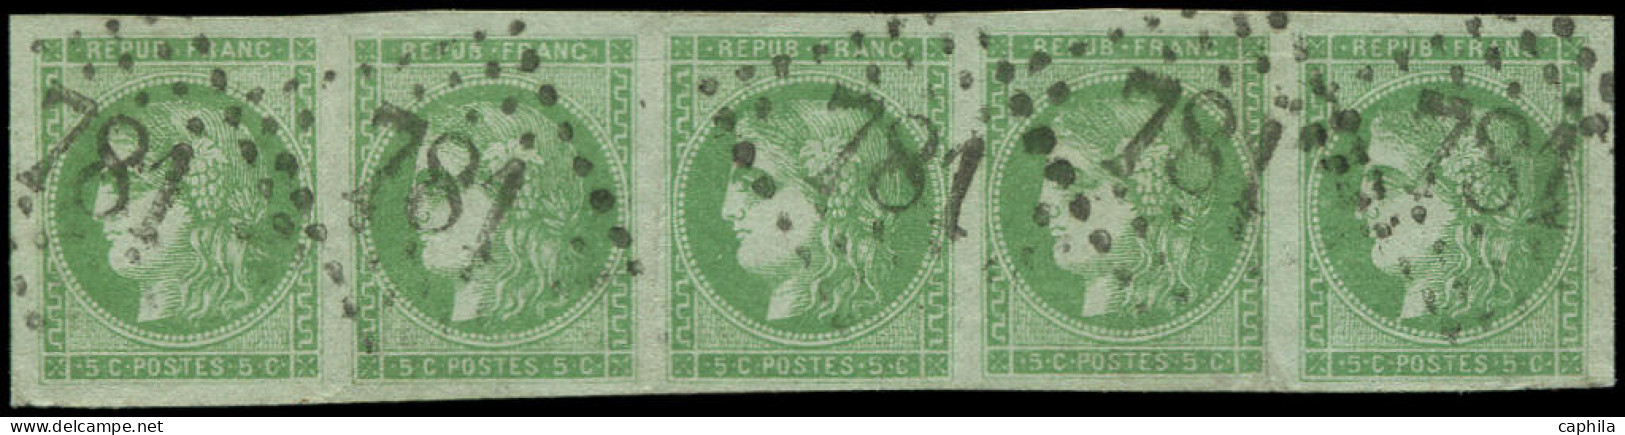 O FRANCE - Poste - 42B, Bande De 5 Horizontal, Signée Calves, Léger Plis: 5c. Vert-jaune - 1870 Bordeaux Printing